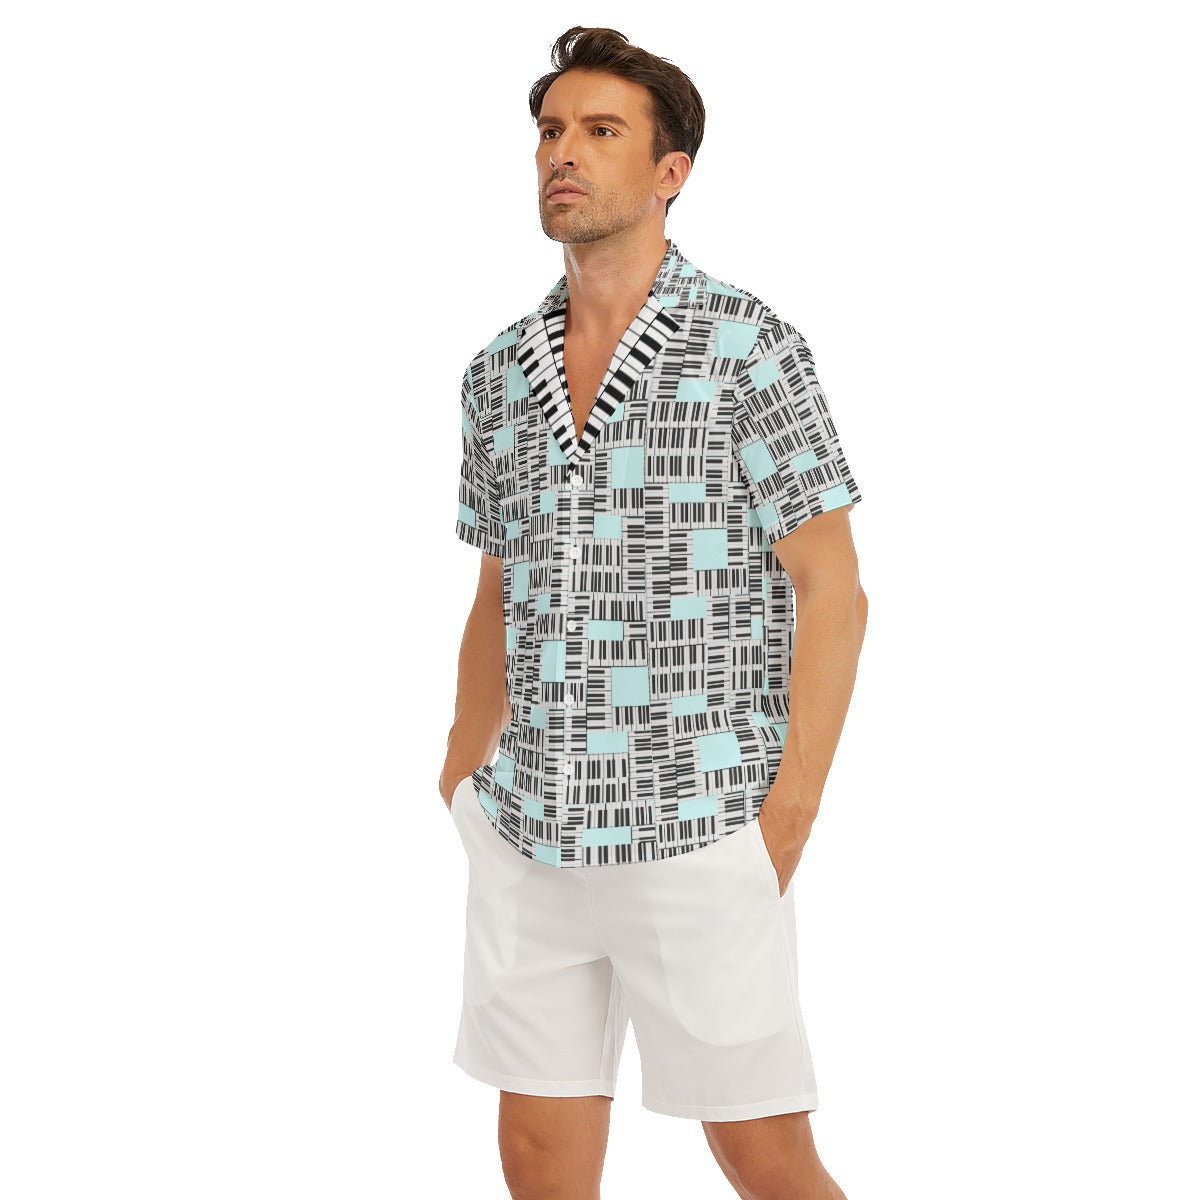 Liberace Piano Key Pattern Men's Button-down short sleeve shirt